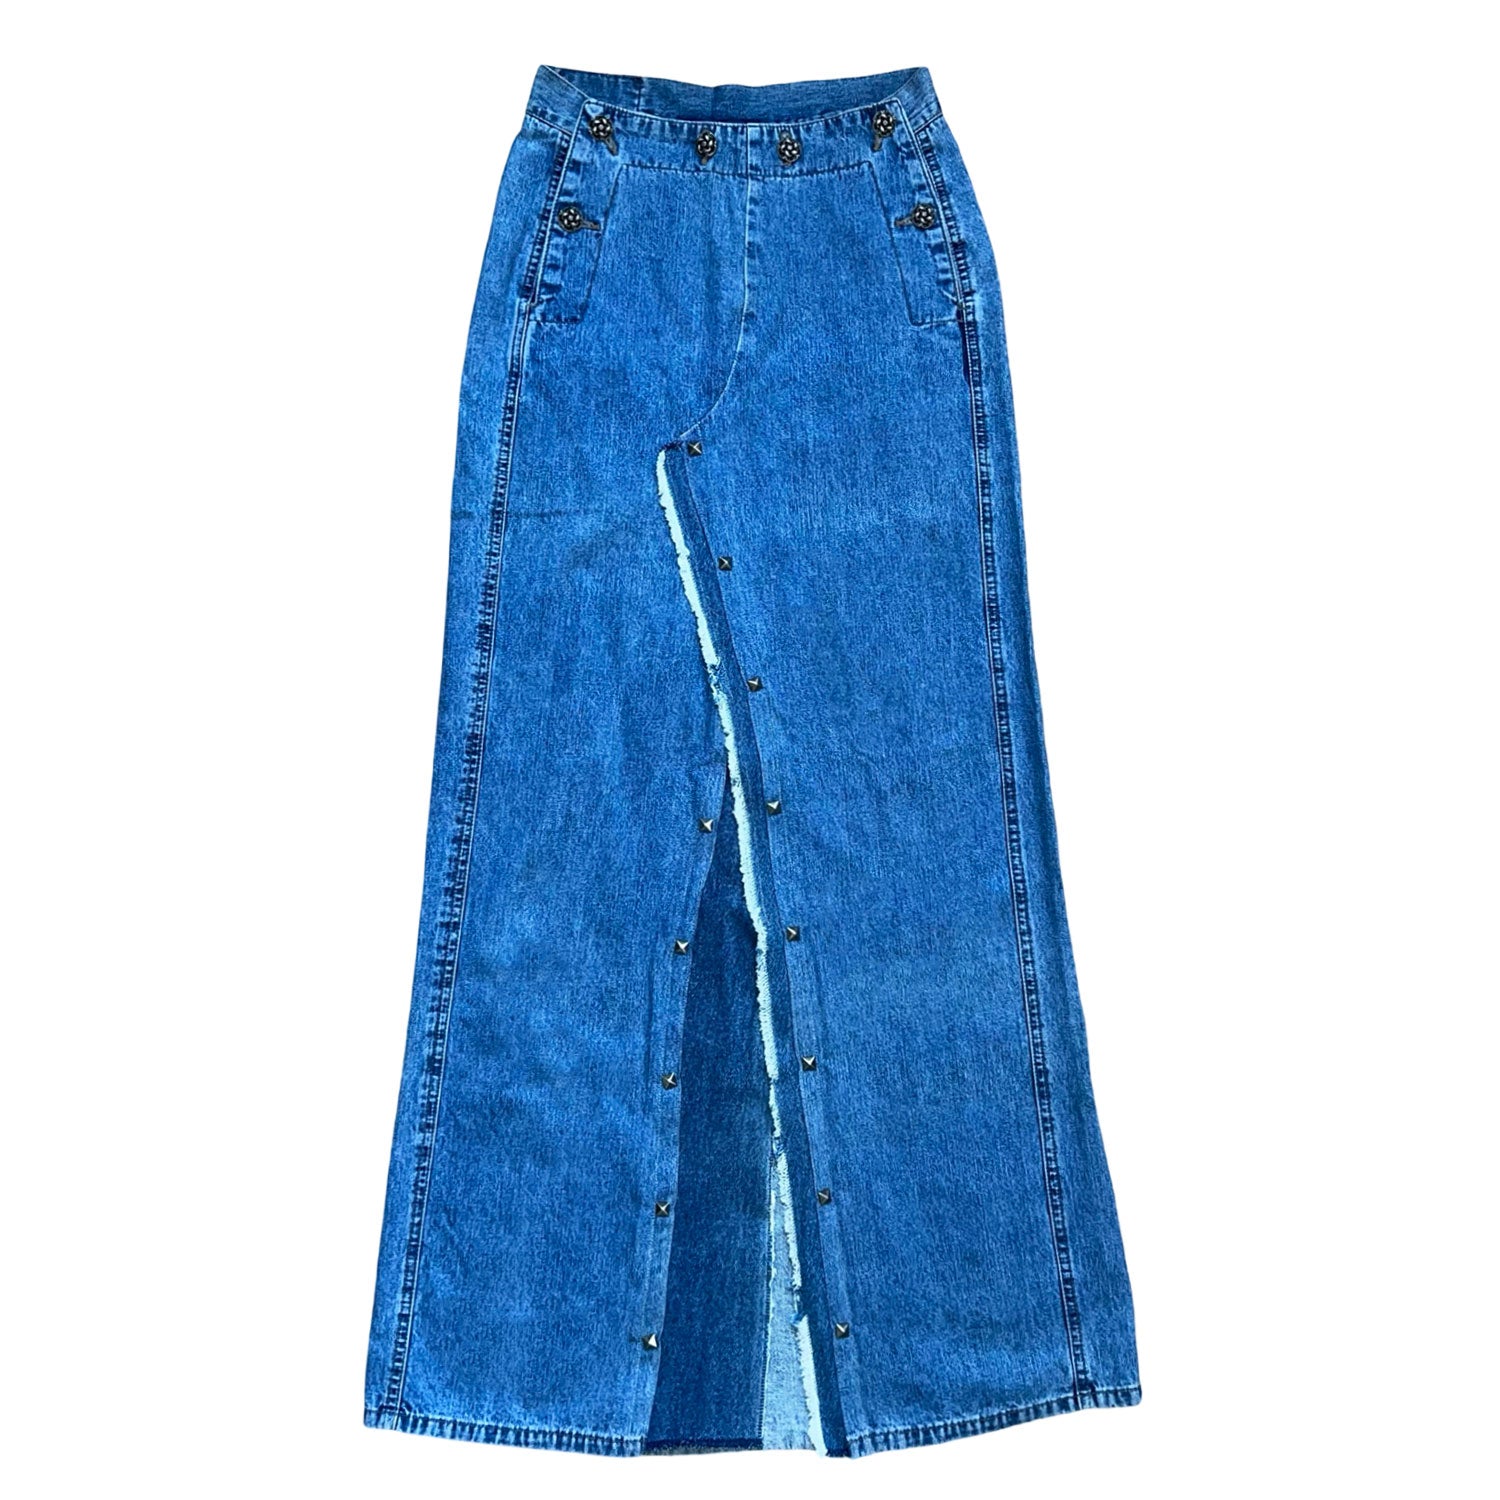 Sailor Maxi Denim Skirt in Blue